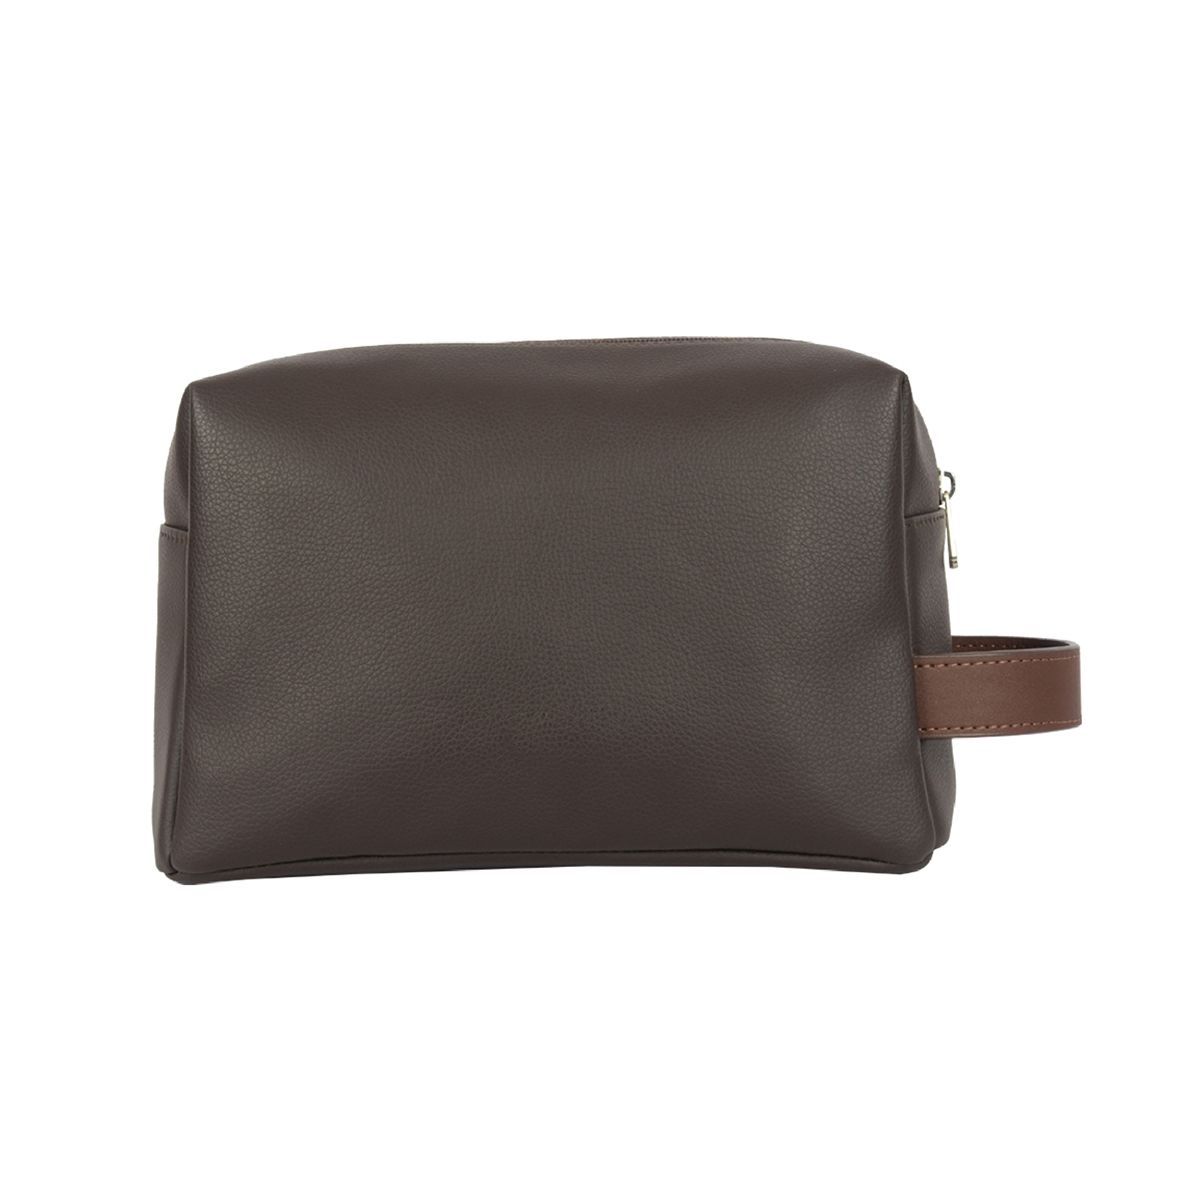 Small Cross Body Purse Minimalist Fabric Handbag Black Crossbody Bag  Shoulder Bag Travel Purse Zipper Pocket Charcoal Gray Pinwheel QCK - Etsy